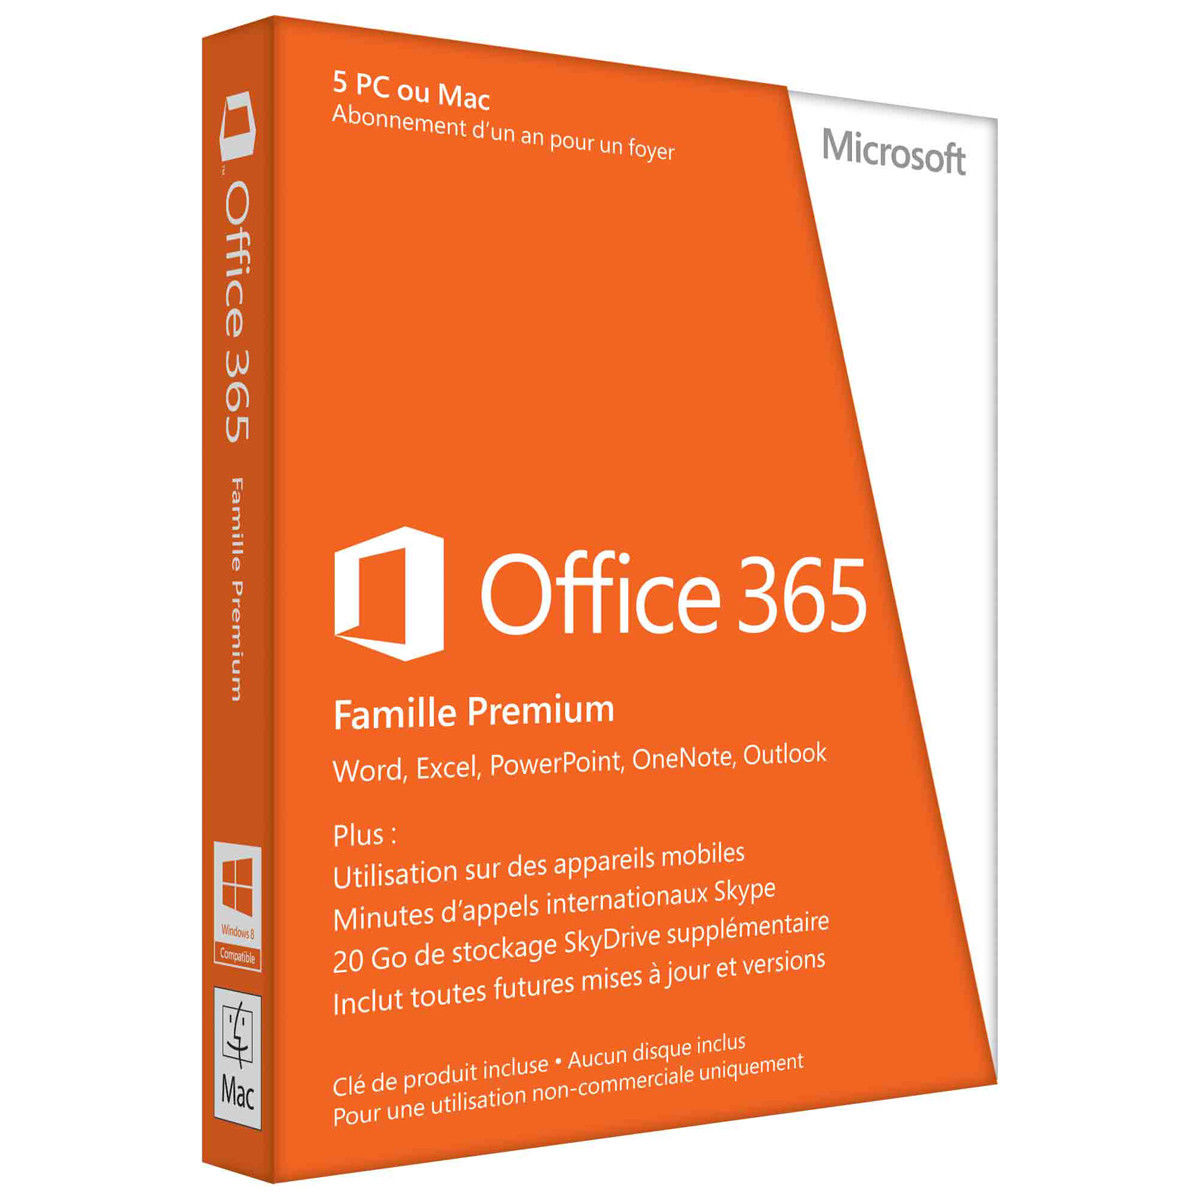 Microsoft - Office 365 Famille   5 PC Windows ou Mac + 5 tablettes   1 an   Telechargement